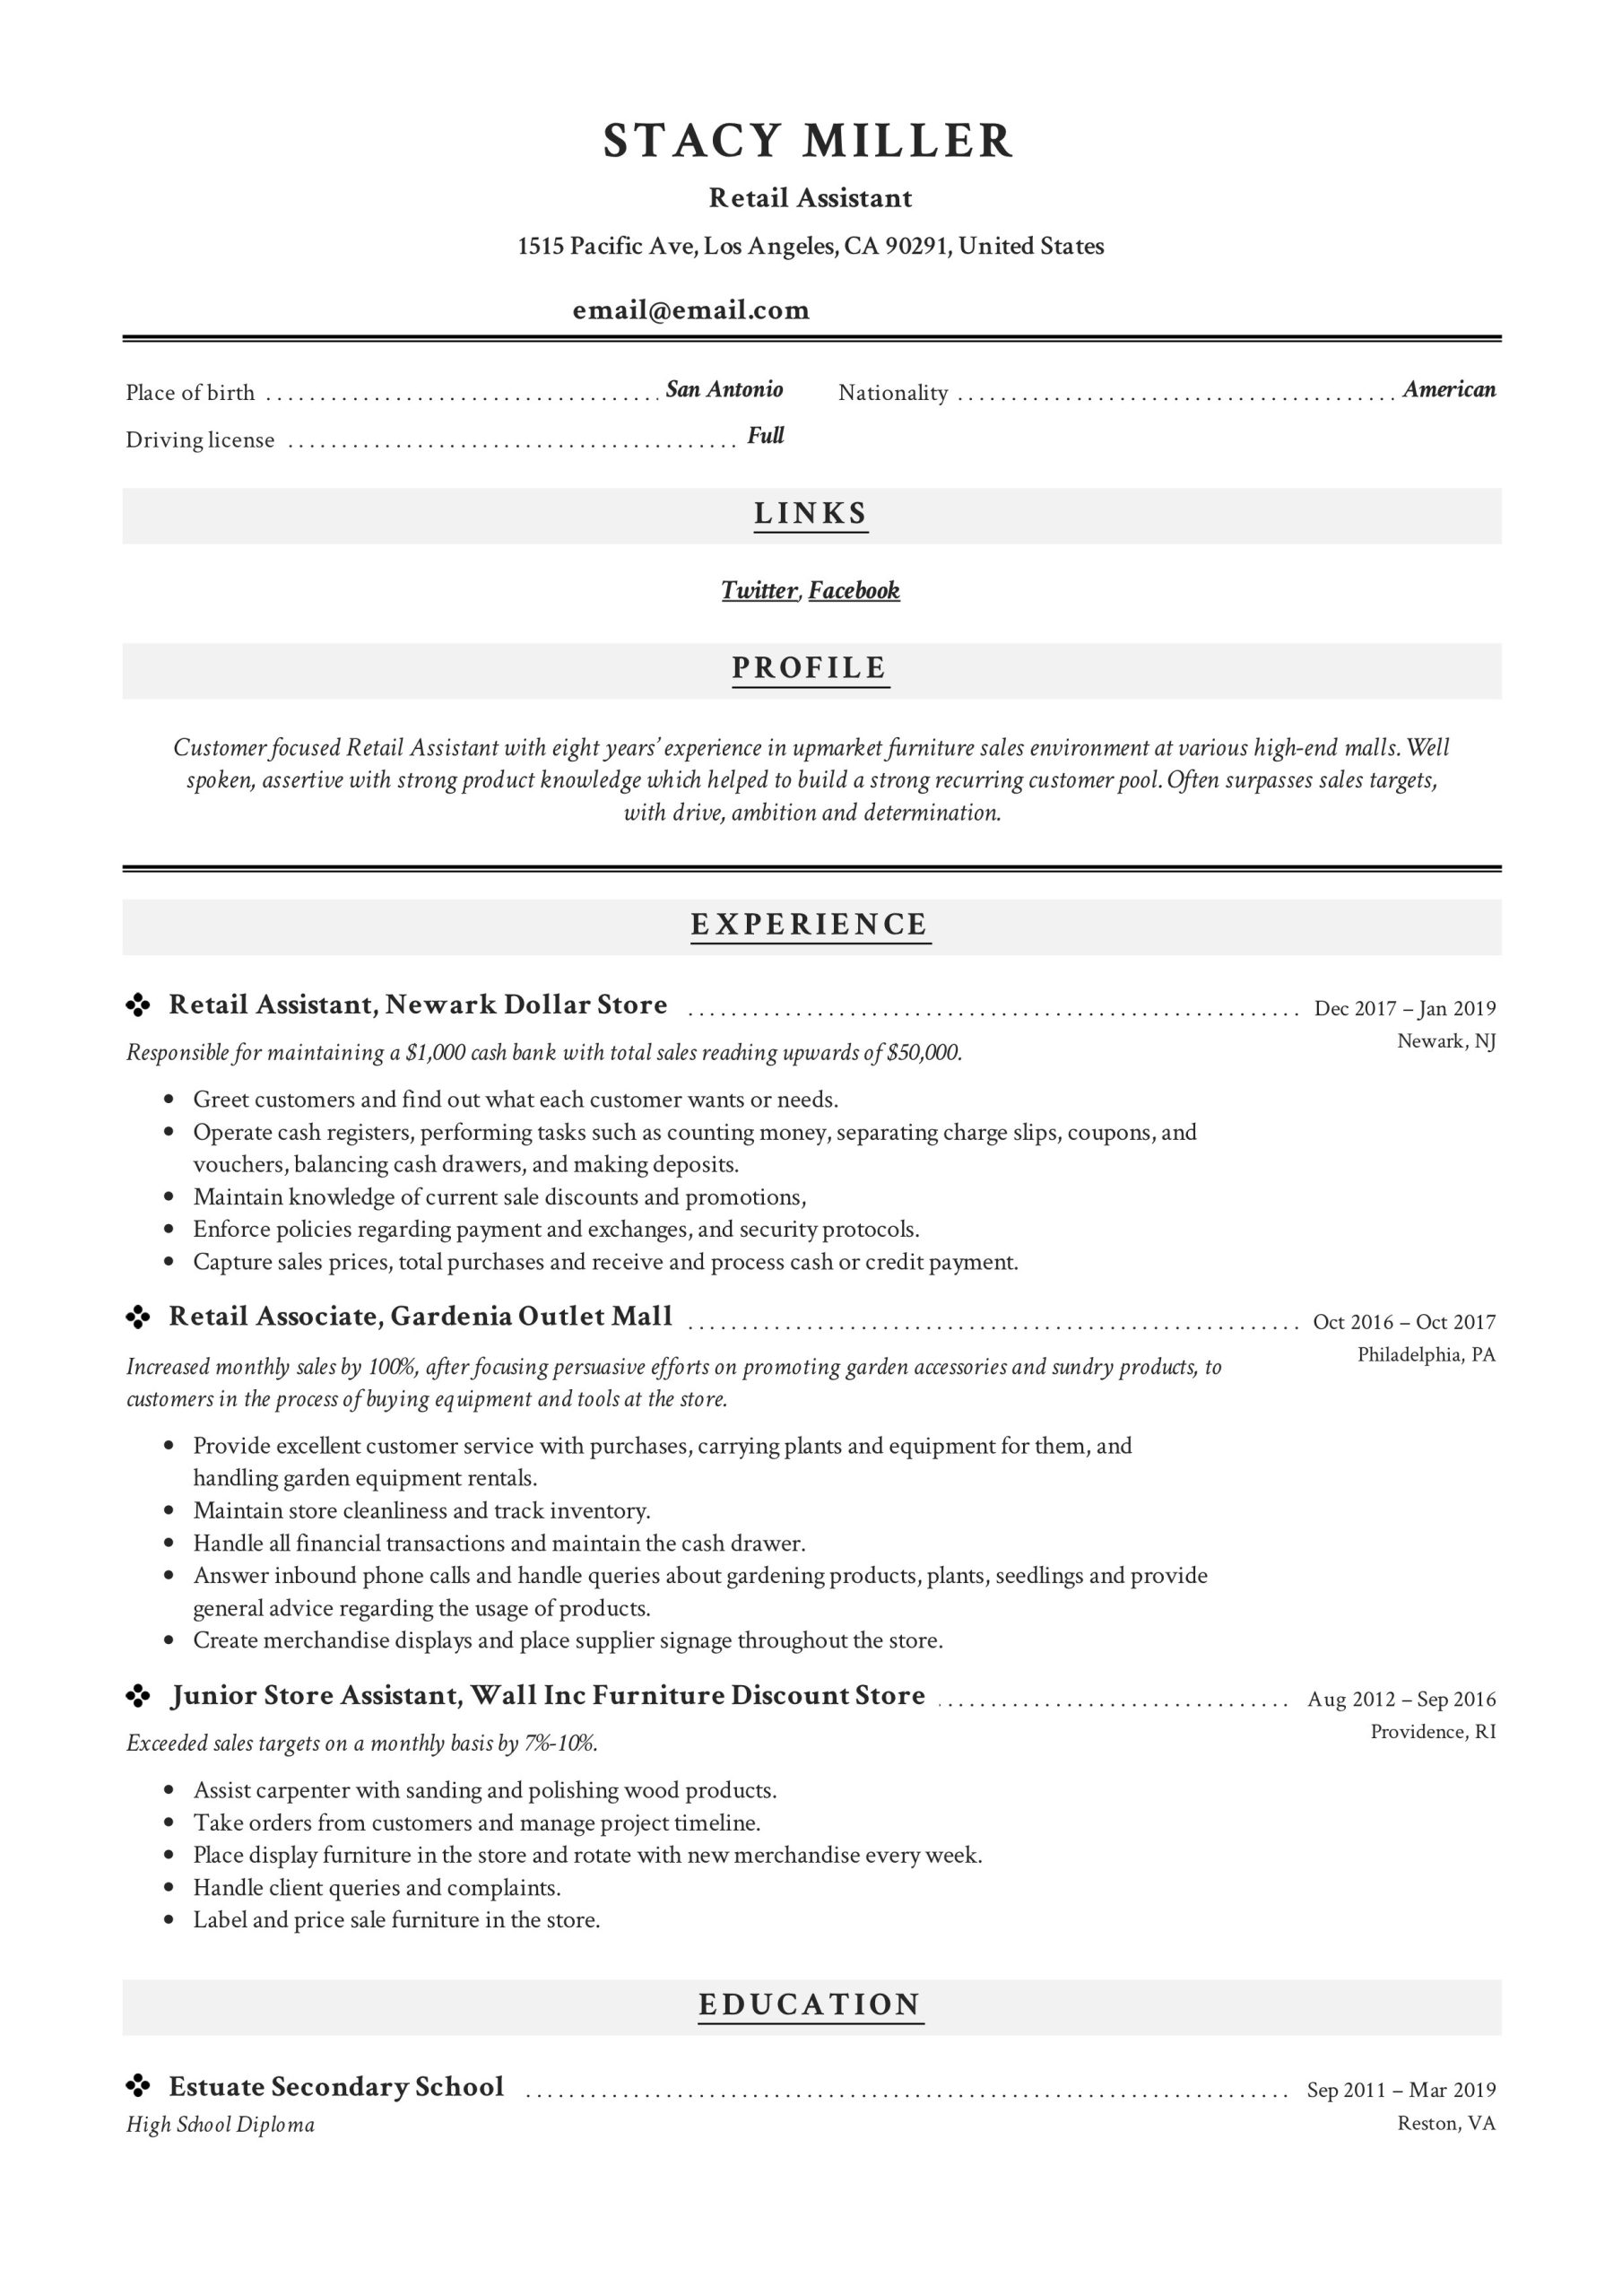 High End Retail assistant Manager Resume Sample 12 Retail assistant Resume Samples & Writing Guide – Resumeviking.com